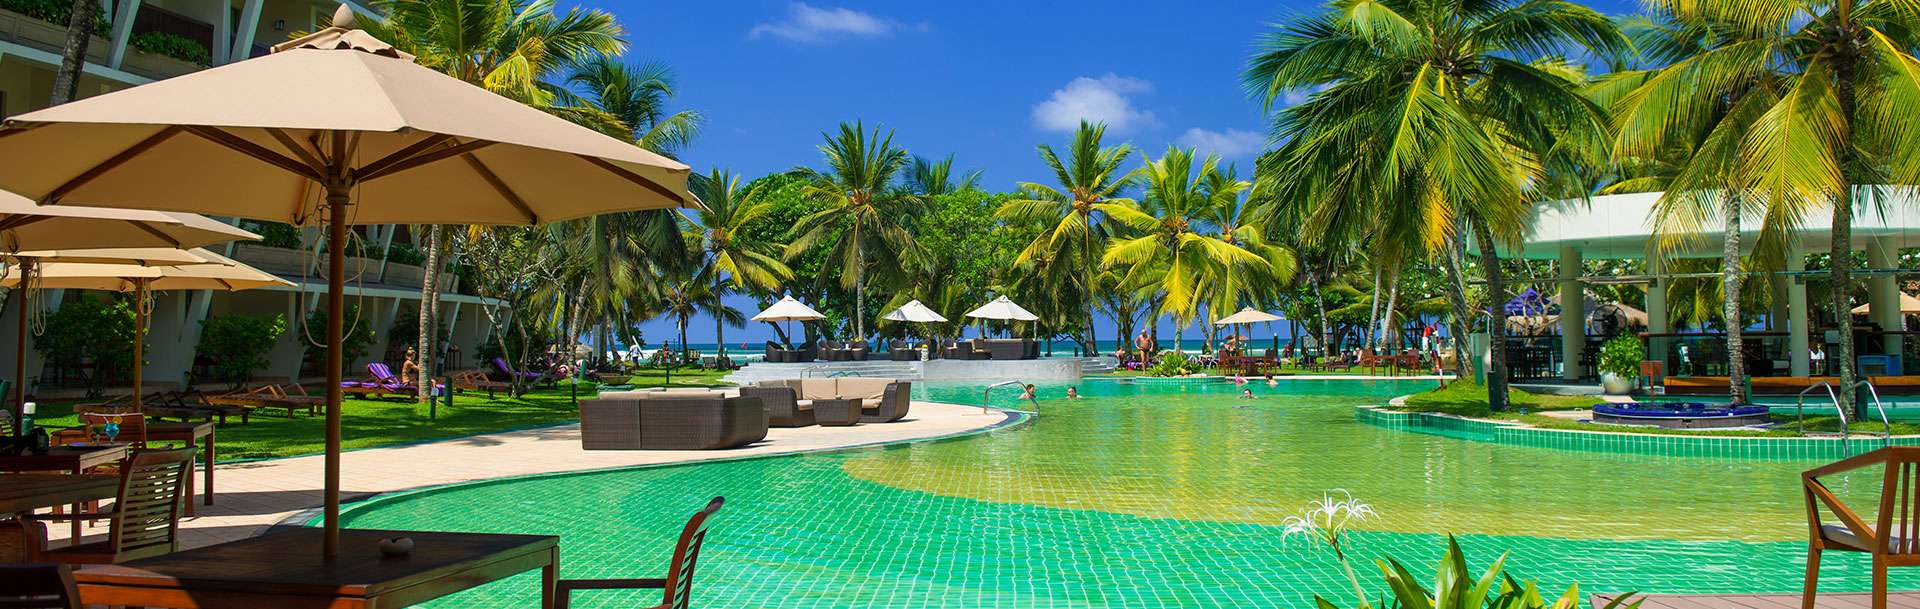 Eden Resort and Spa, Sri Lanka | Blue Bay Travel